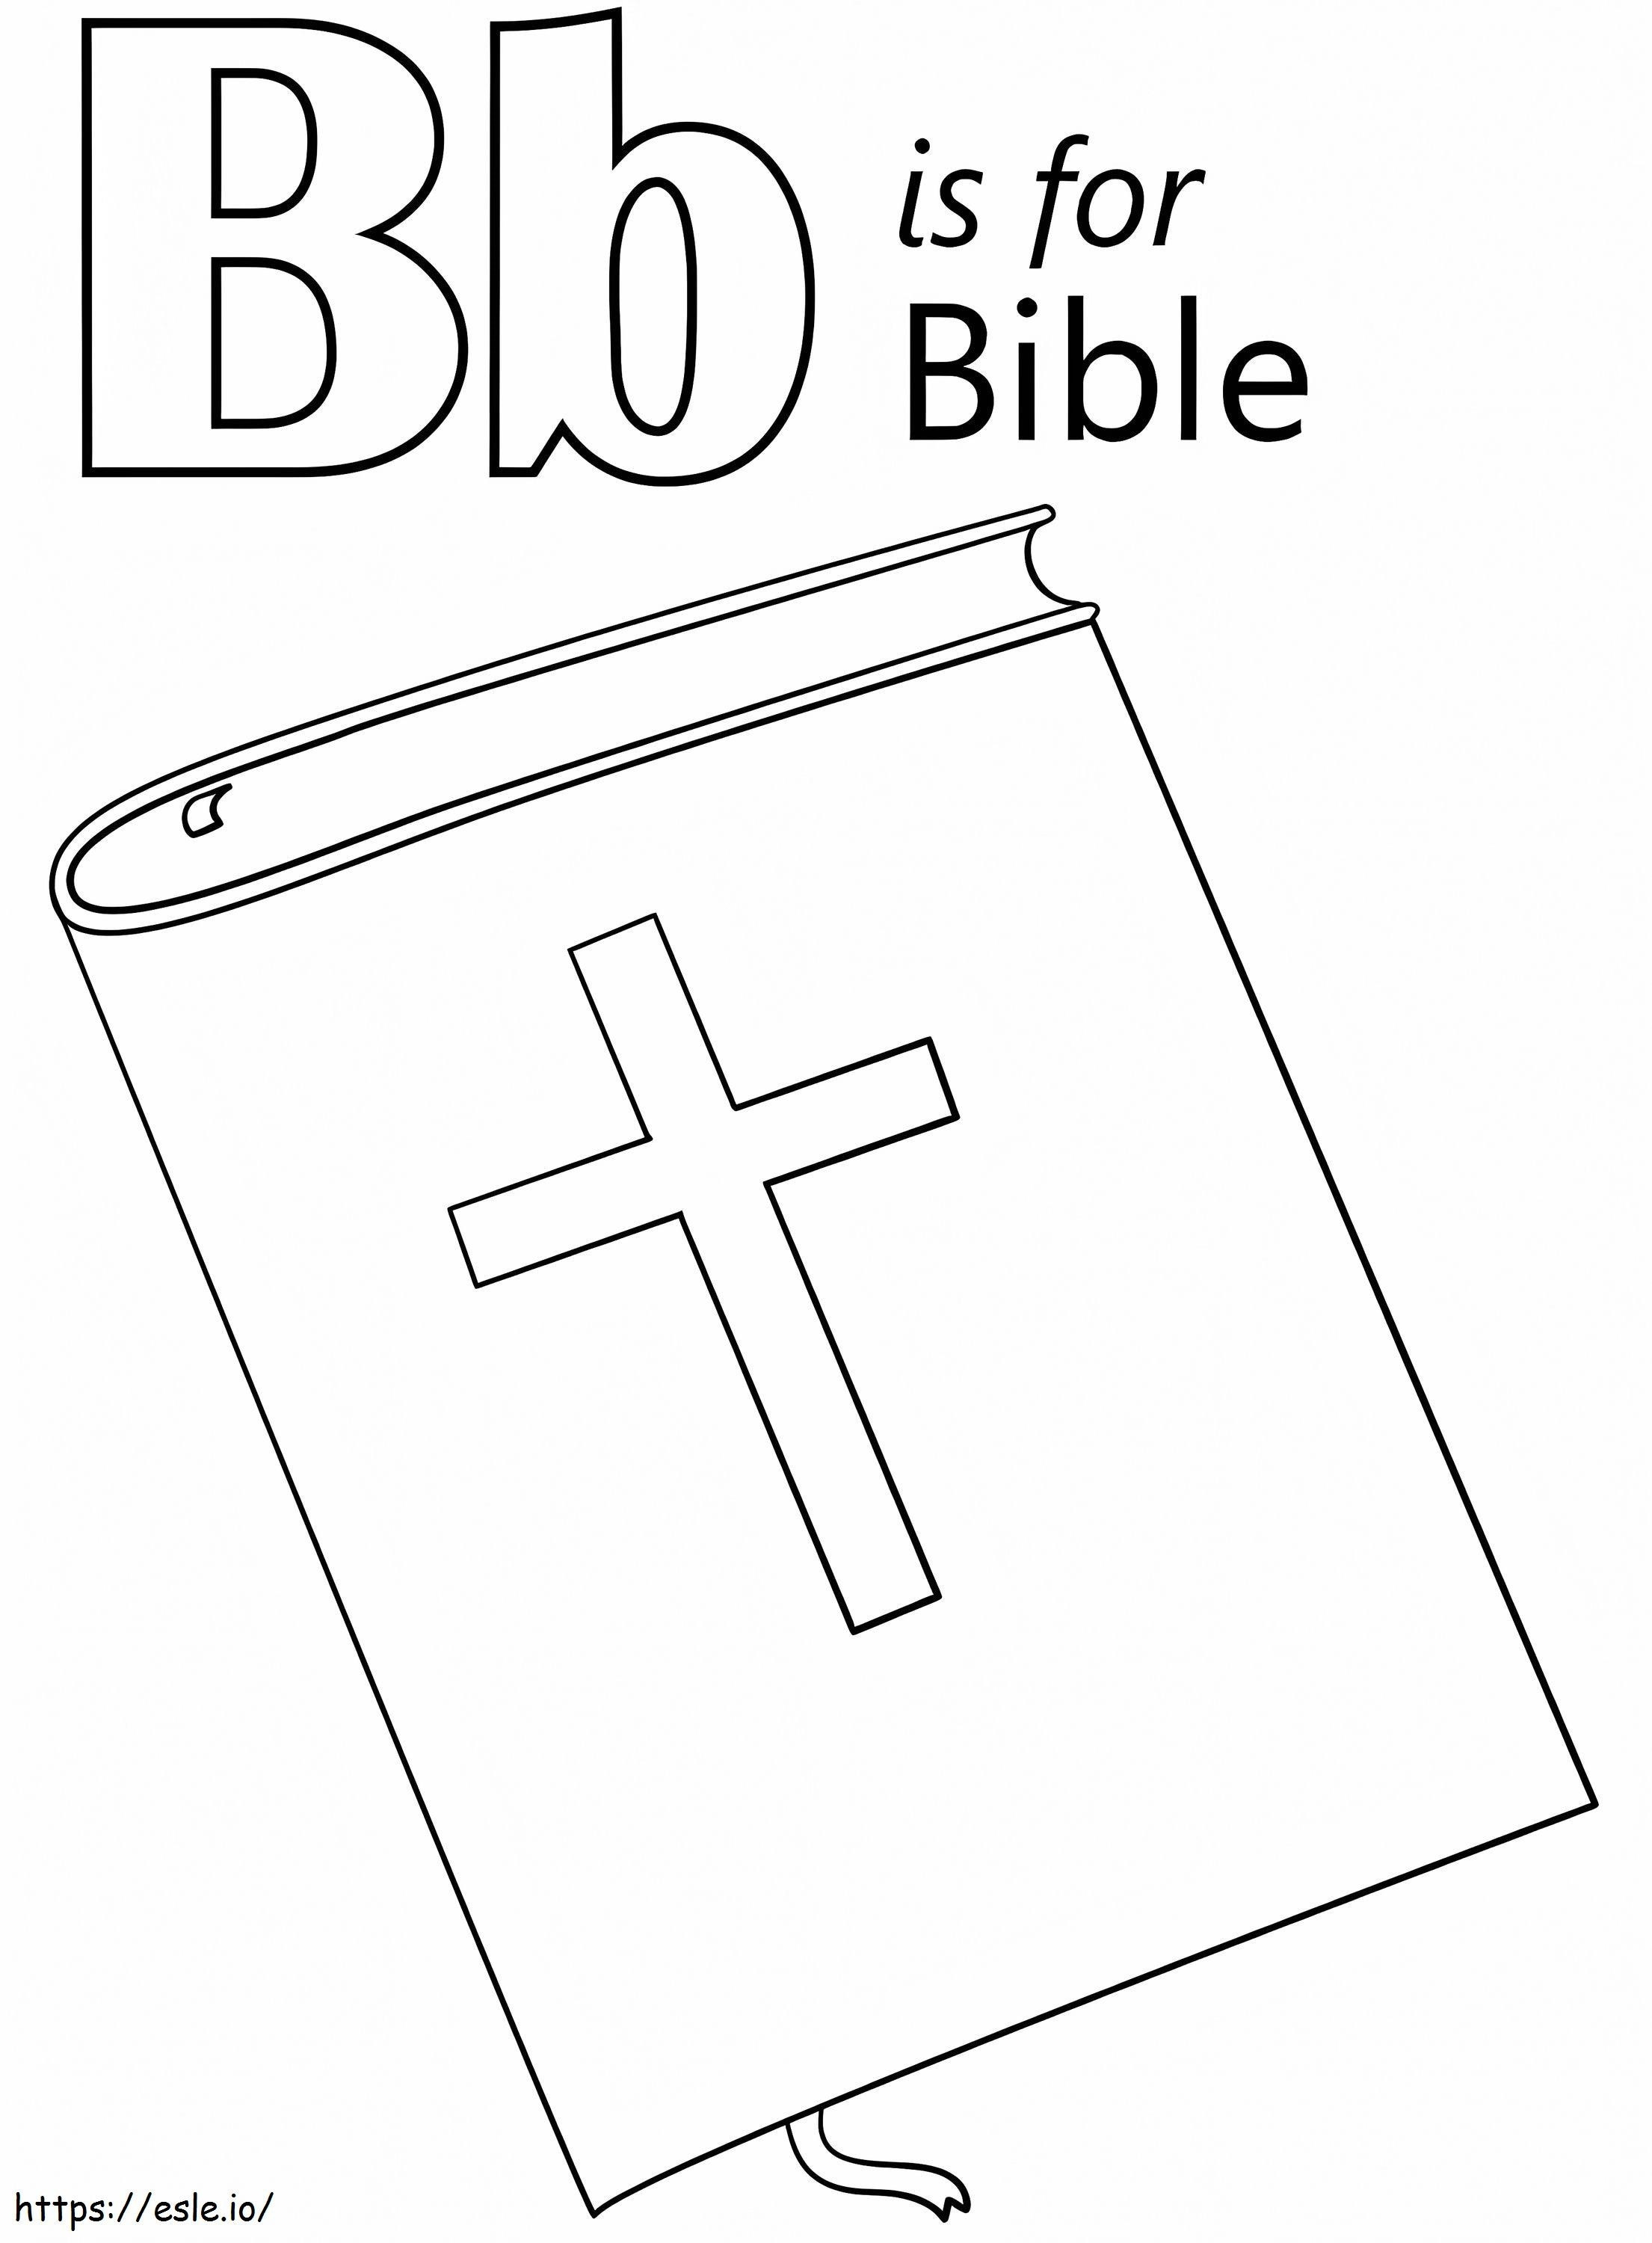 List biblijny B kolorowanka